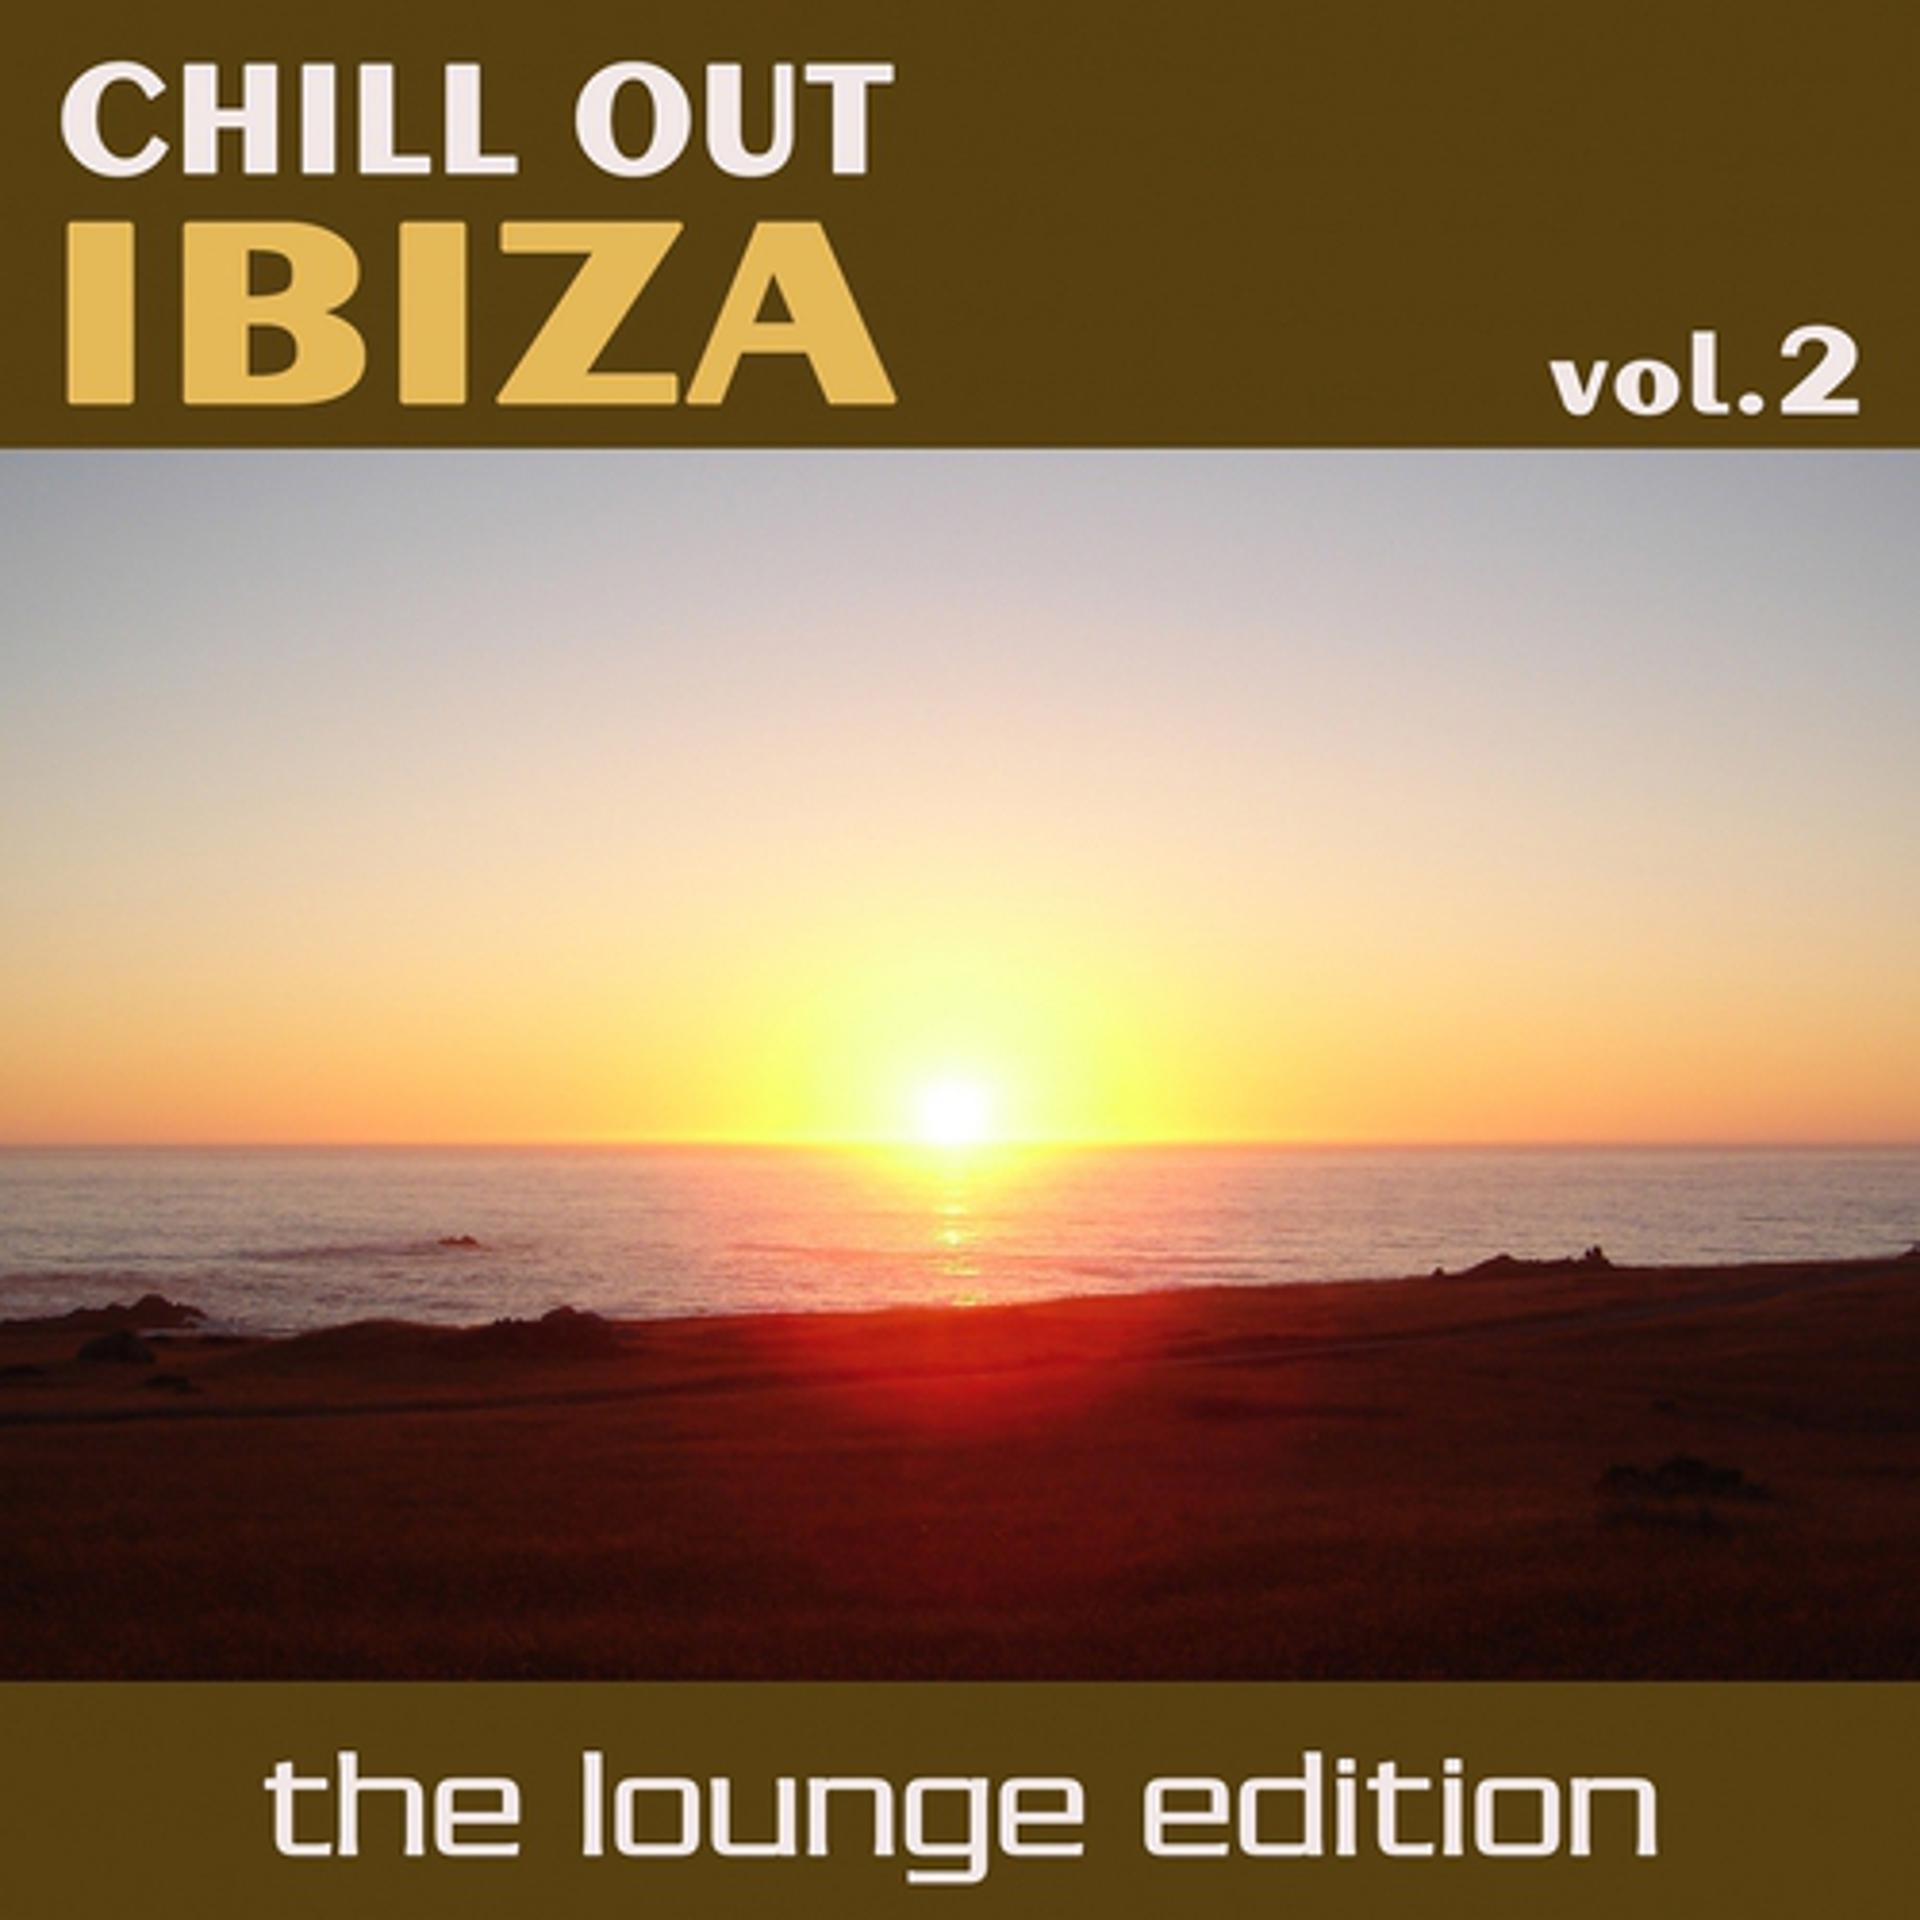 Chilled ibiza. Ibiza 2008 альбом. Chill out. Закат издания. Обложка альбома чилл.